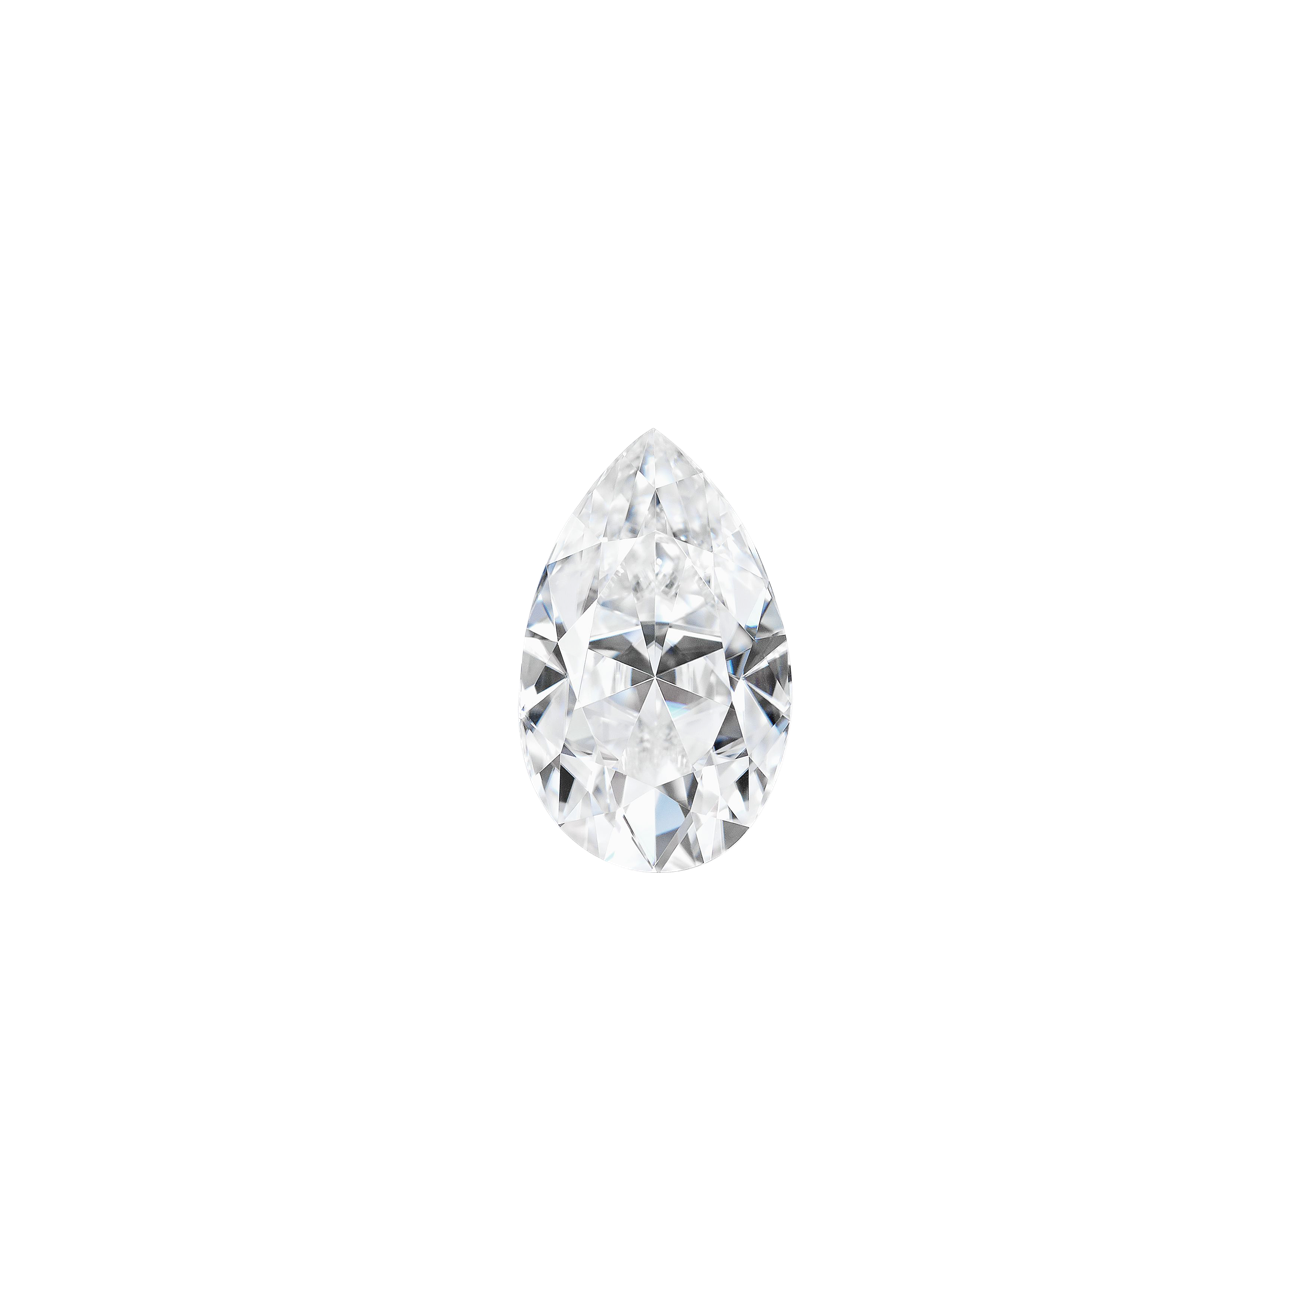 Pear diamond loose stone